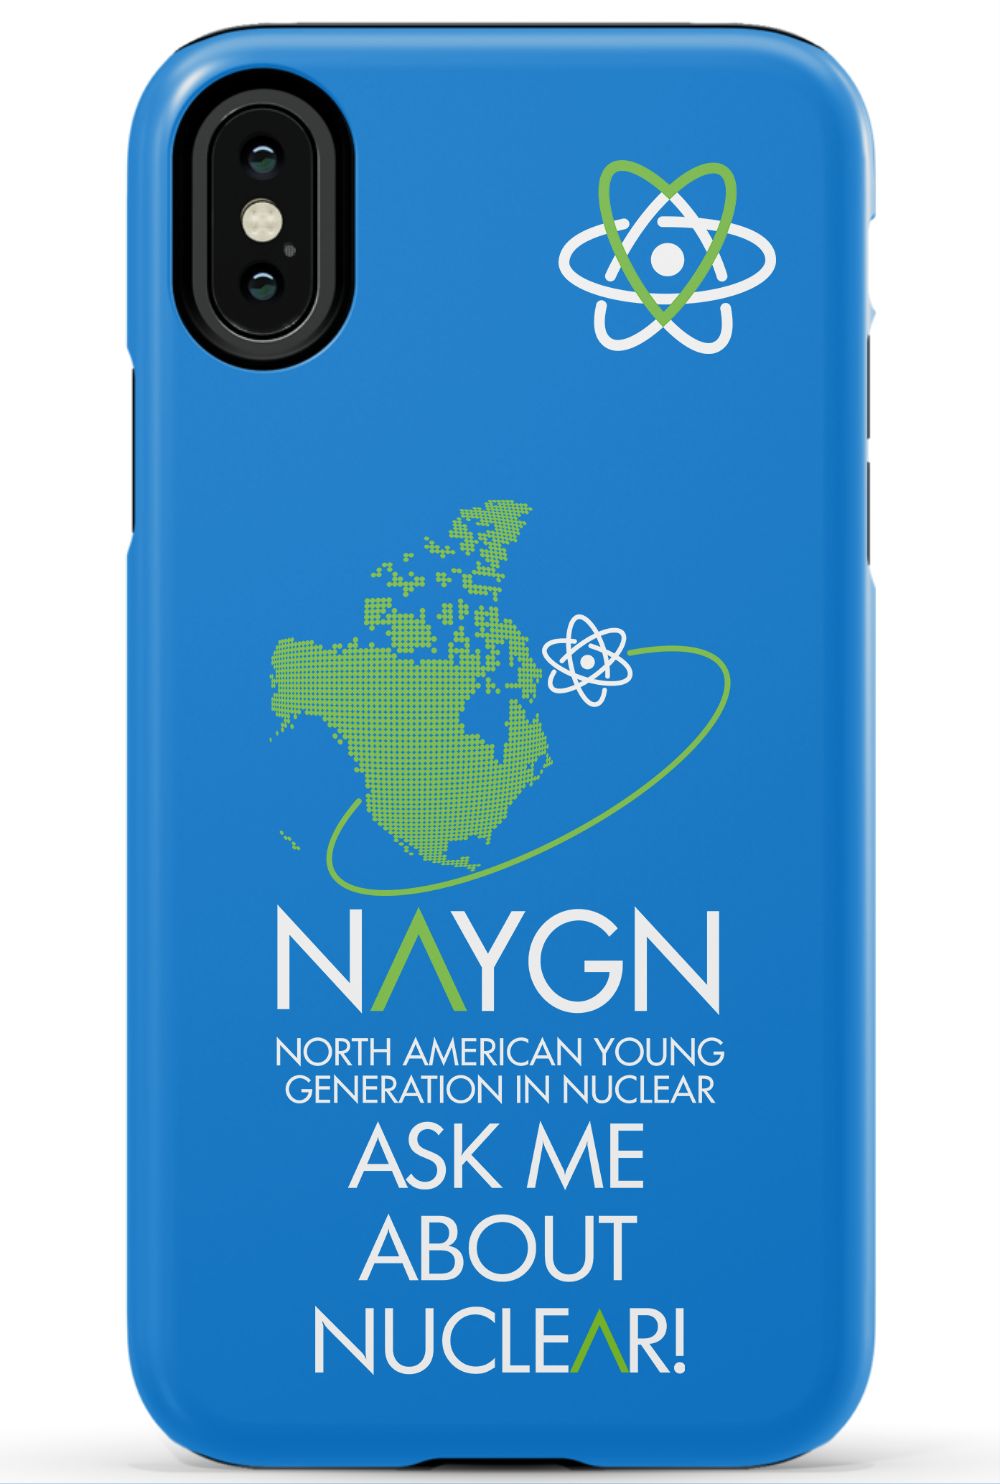 NAYGN (Private Design)